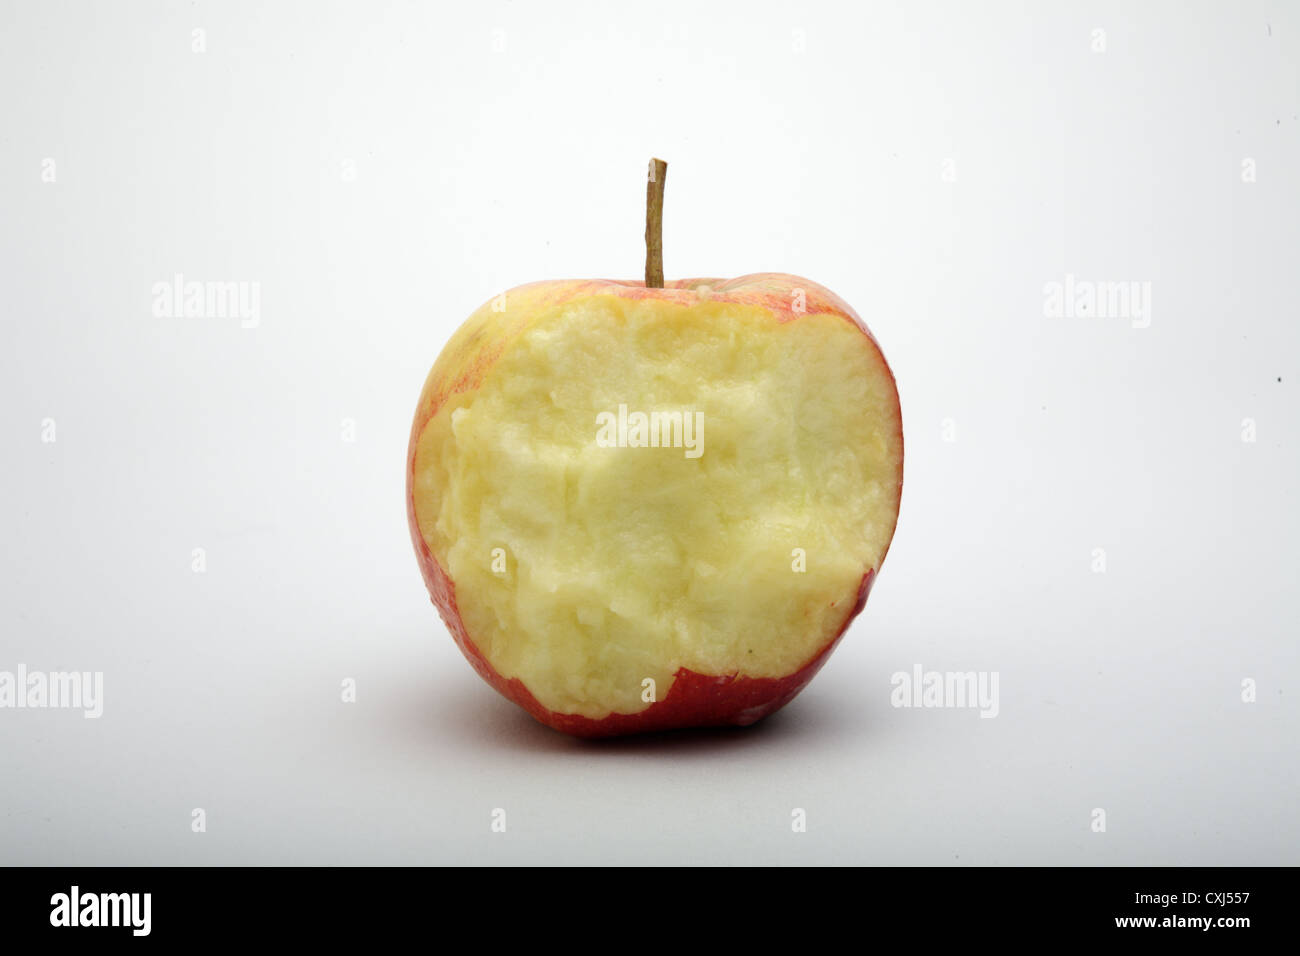 Half eaten apple on a white background. Stock Photo